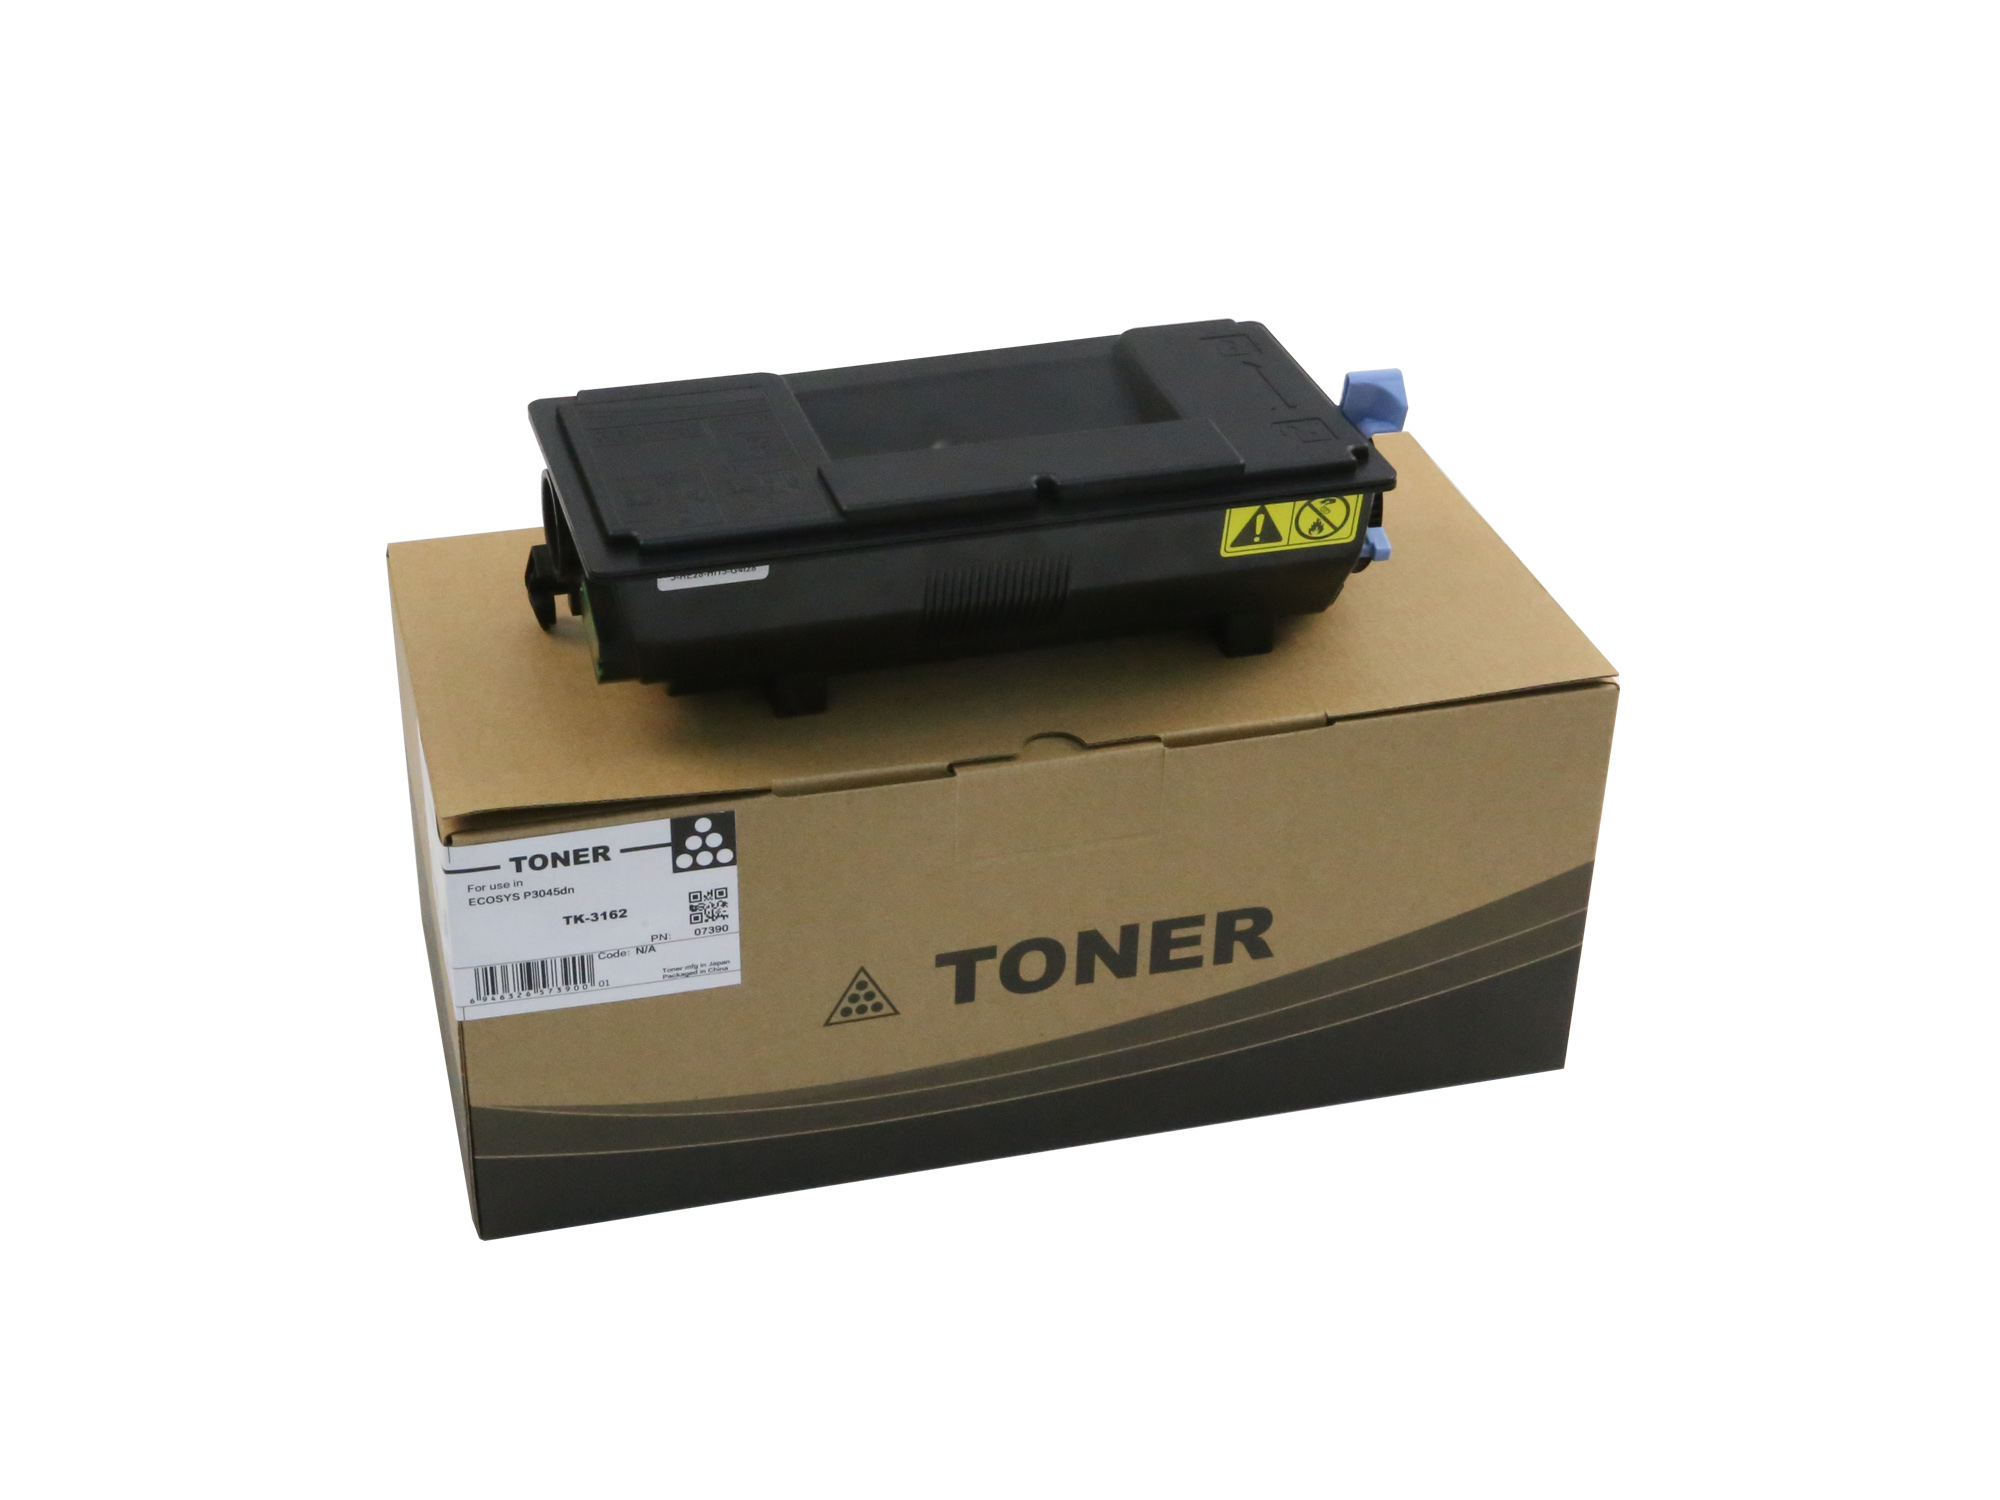 TK-3162 Toner Cartridge for Kyocera ECOSYS P3045dn